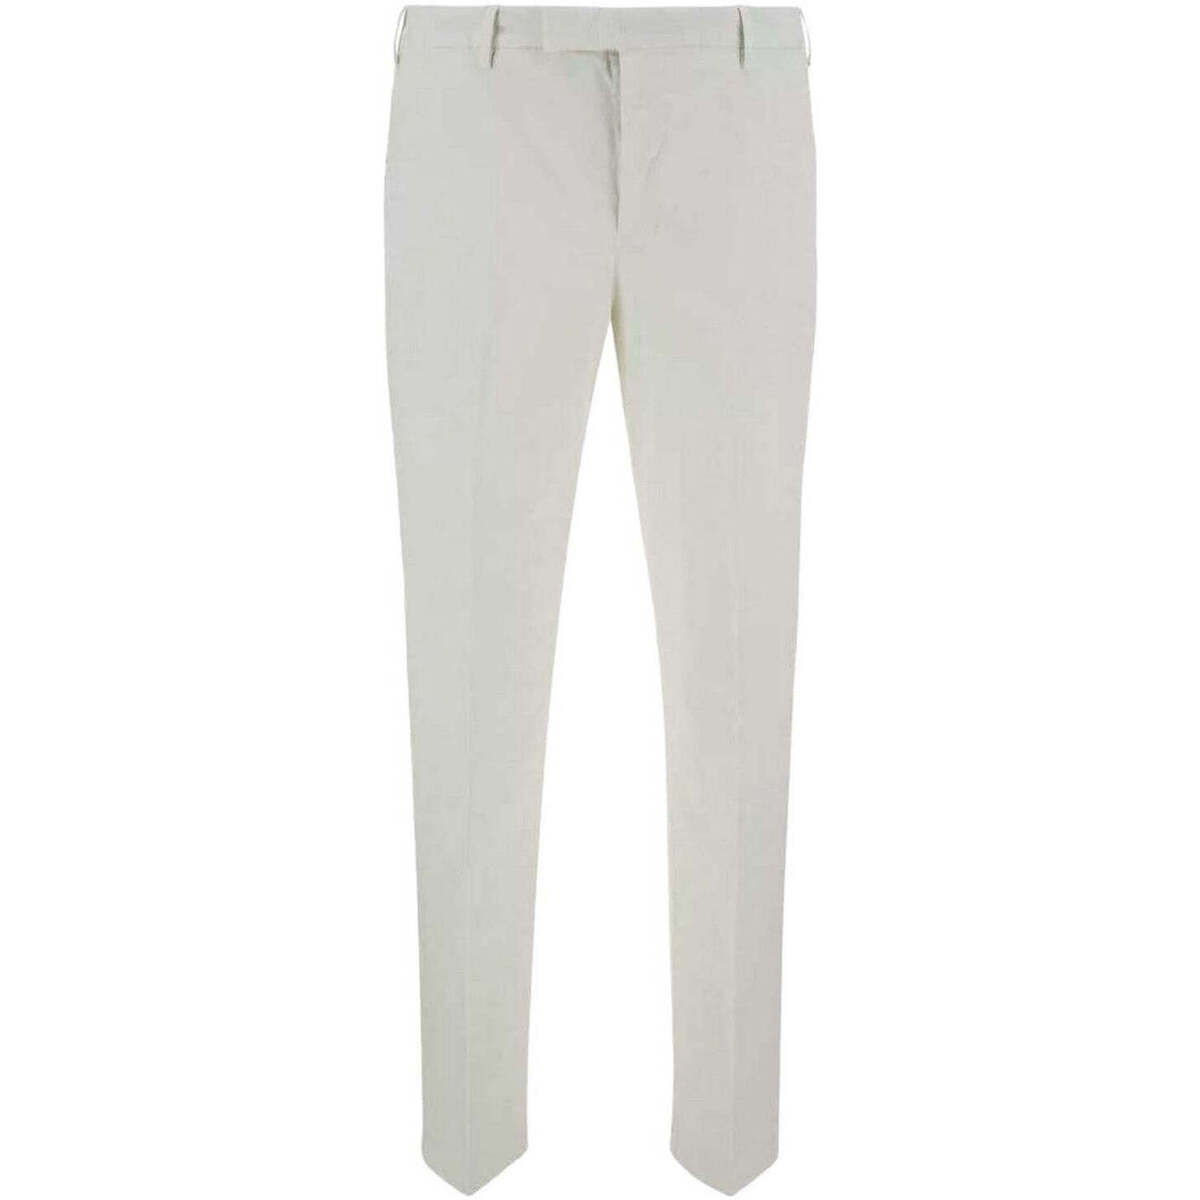 Abbigliamento Uomo Pantaloni Pt Torino Pantalone Uomo Master COATMAZ00CL1 NU35 Y010 Bianco Bianco